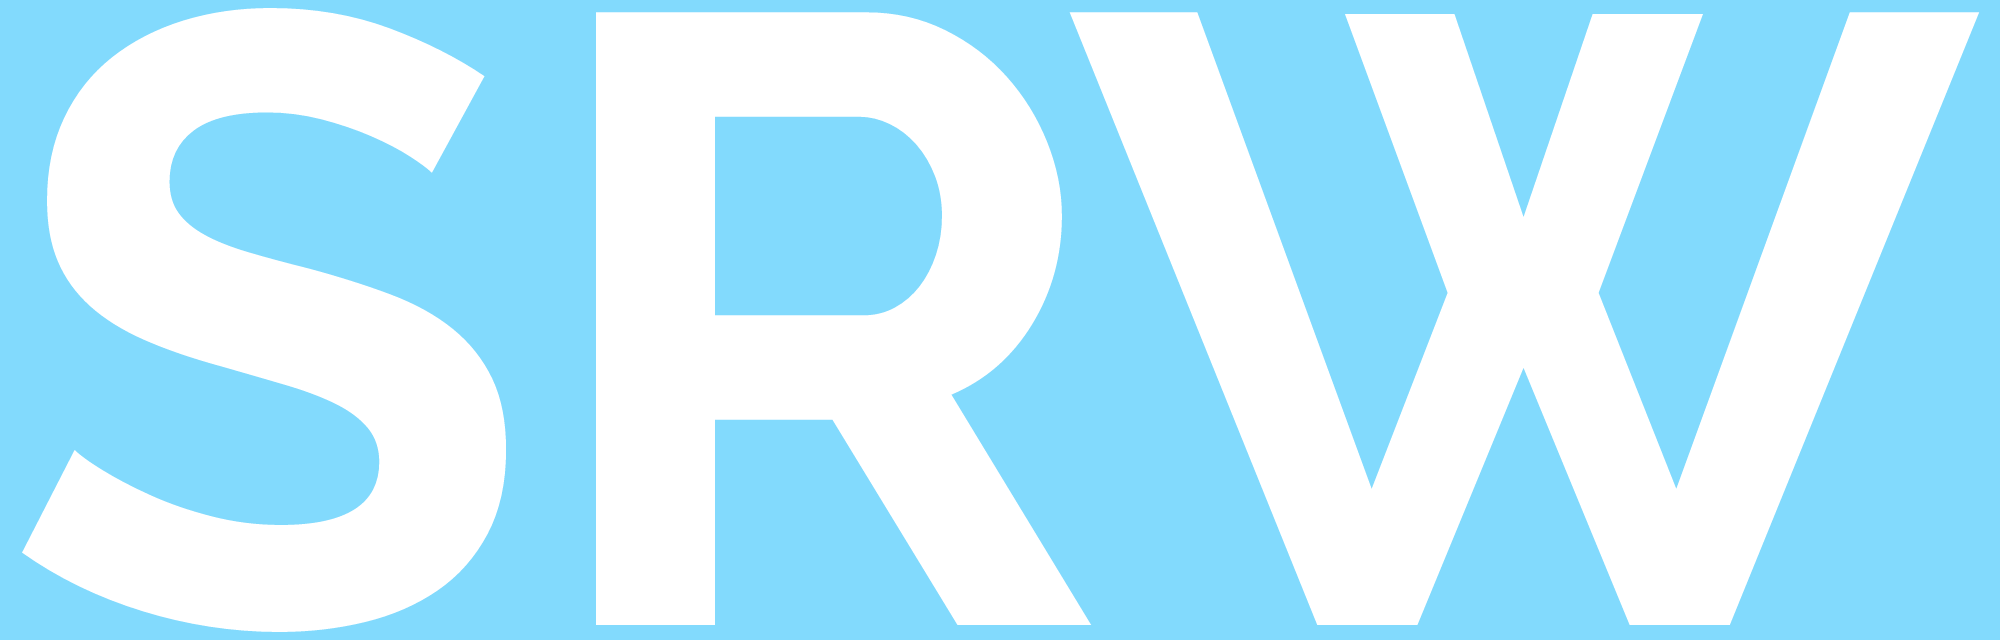 SRW Logo